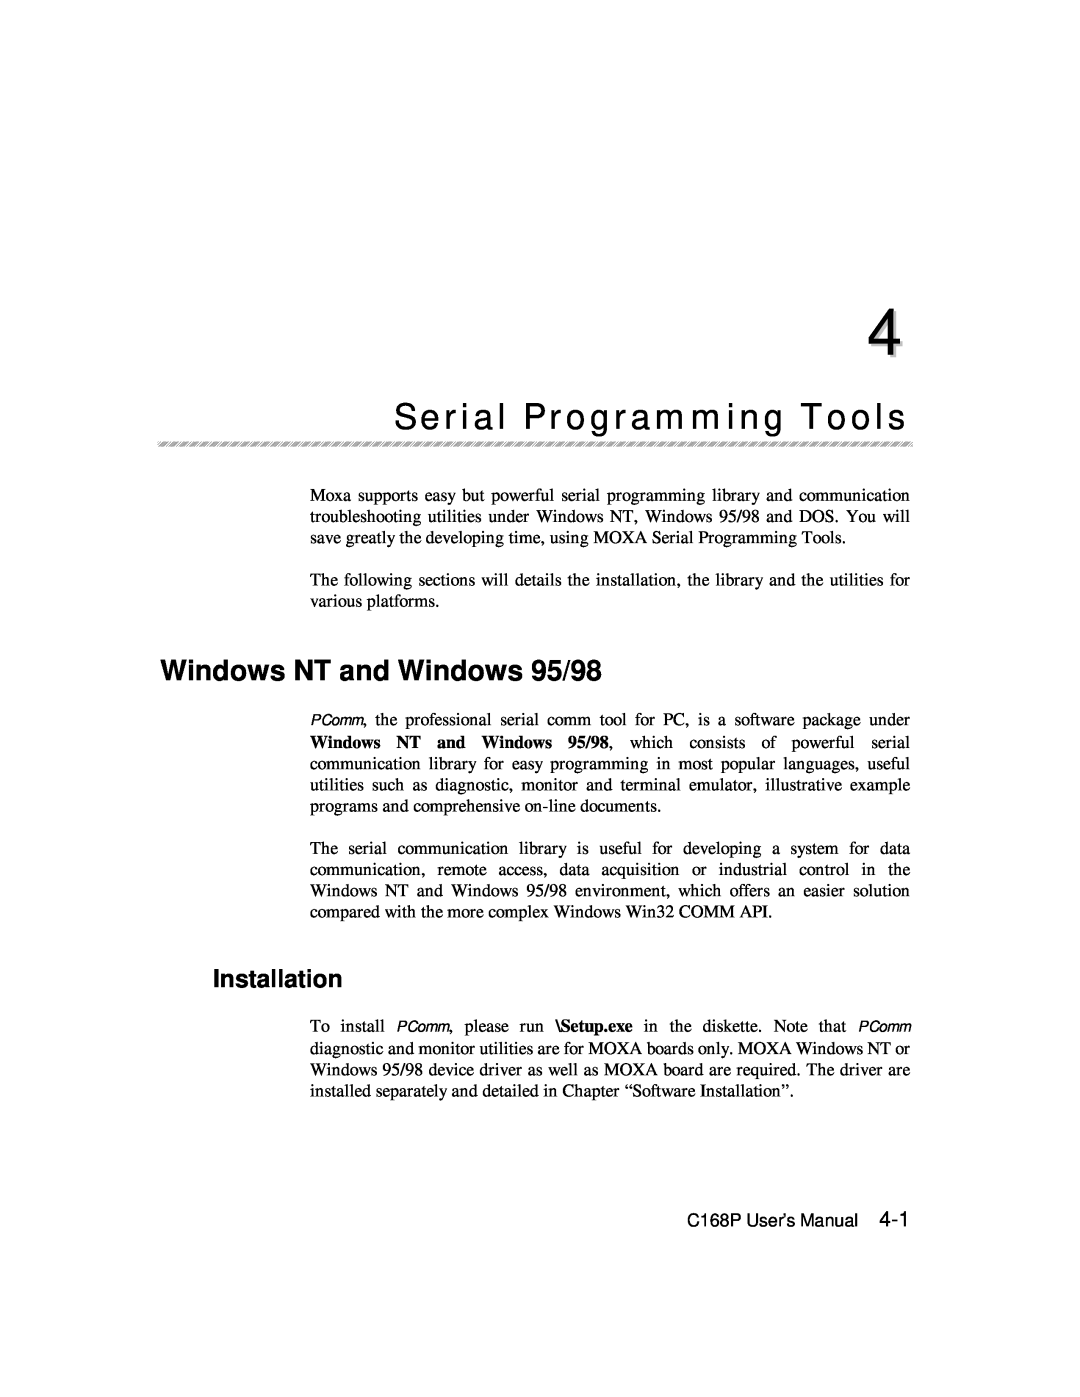 Moxa Technologies C168P user manual Serial Programming Tools, Windows NT and Windows 95/98, Installation 